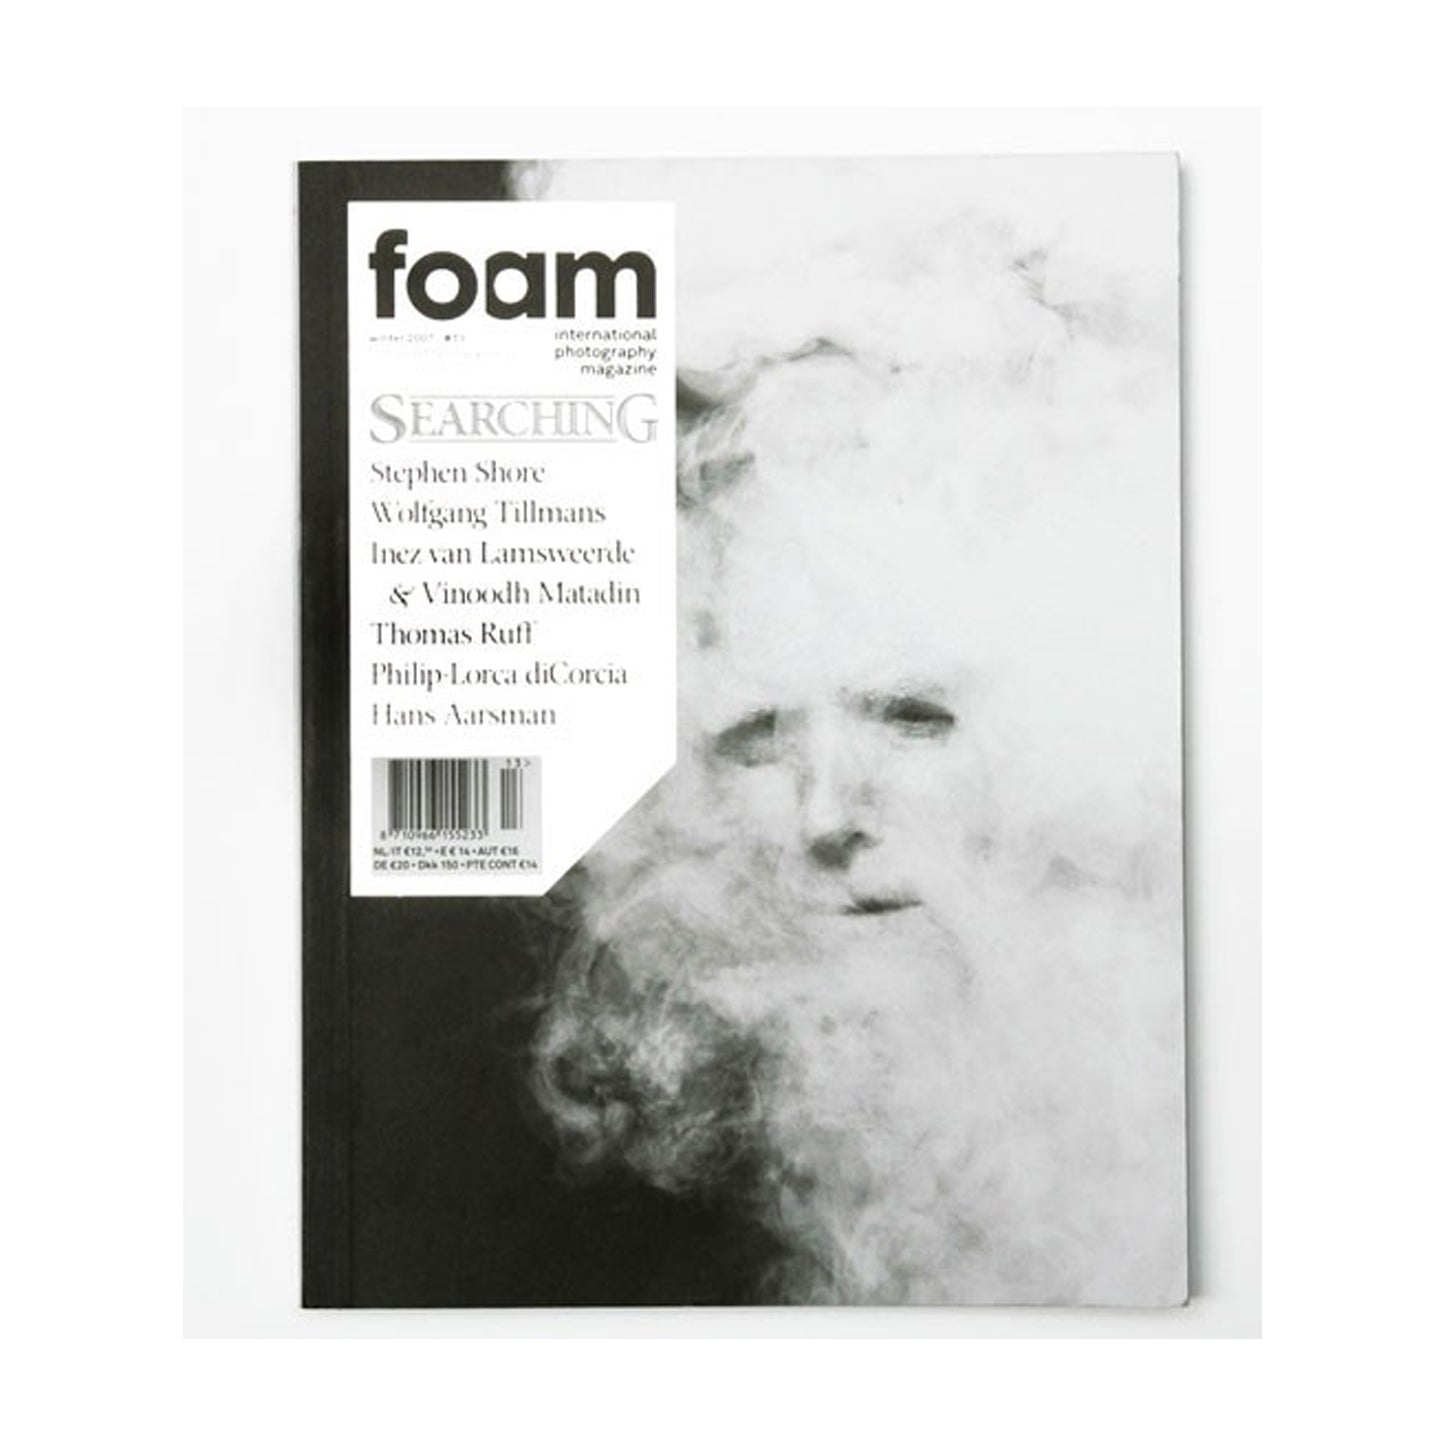 Foam magazine Photo Museum Ireland